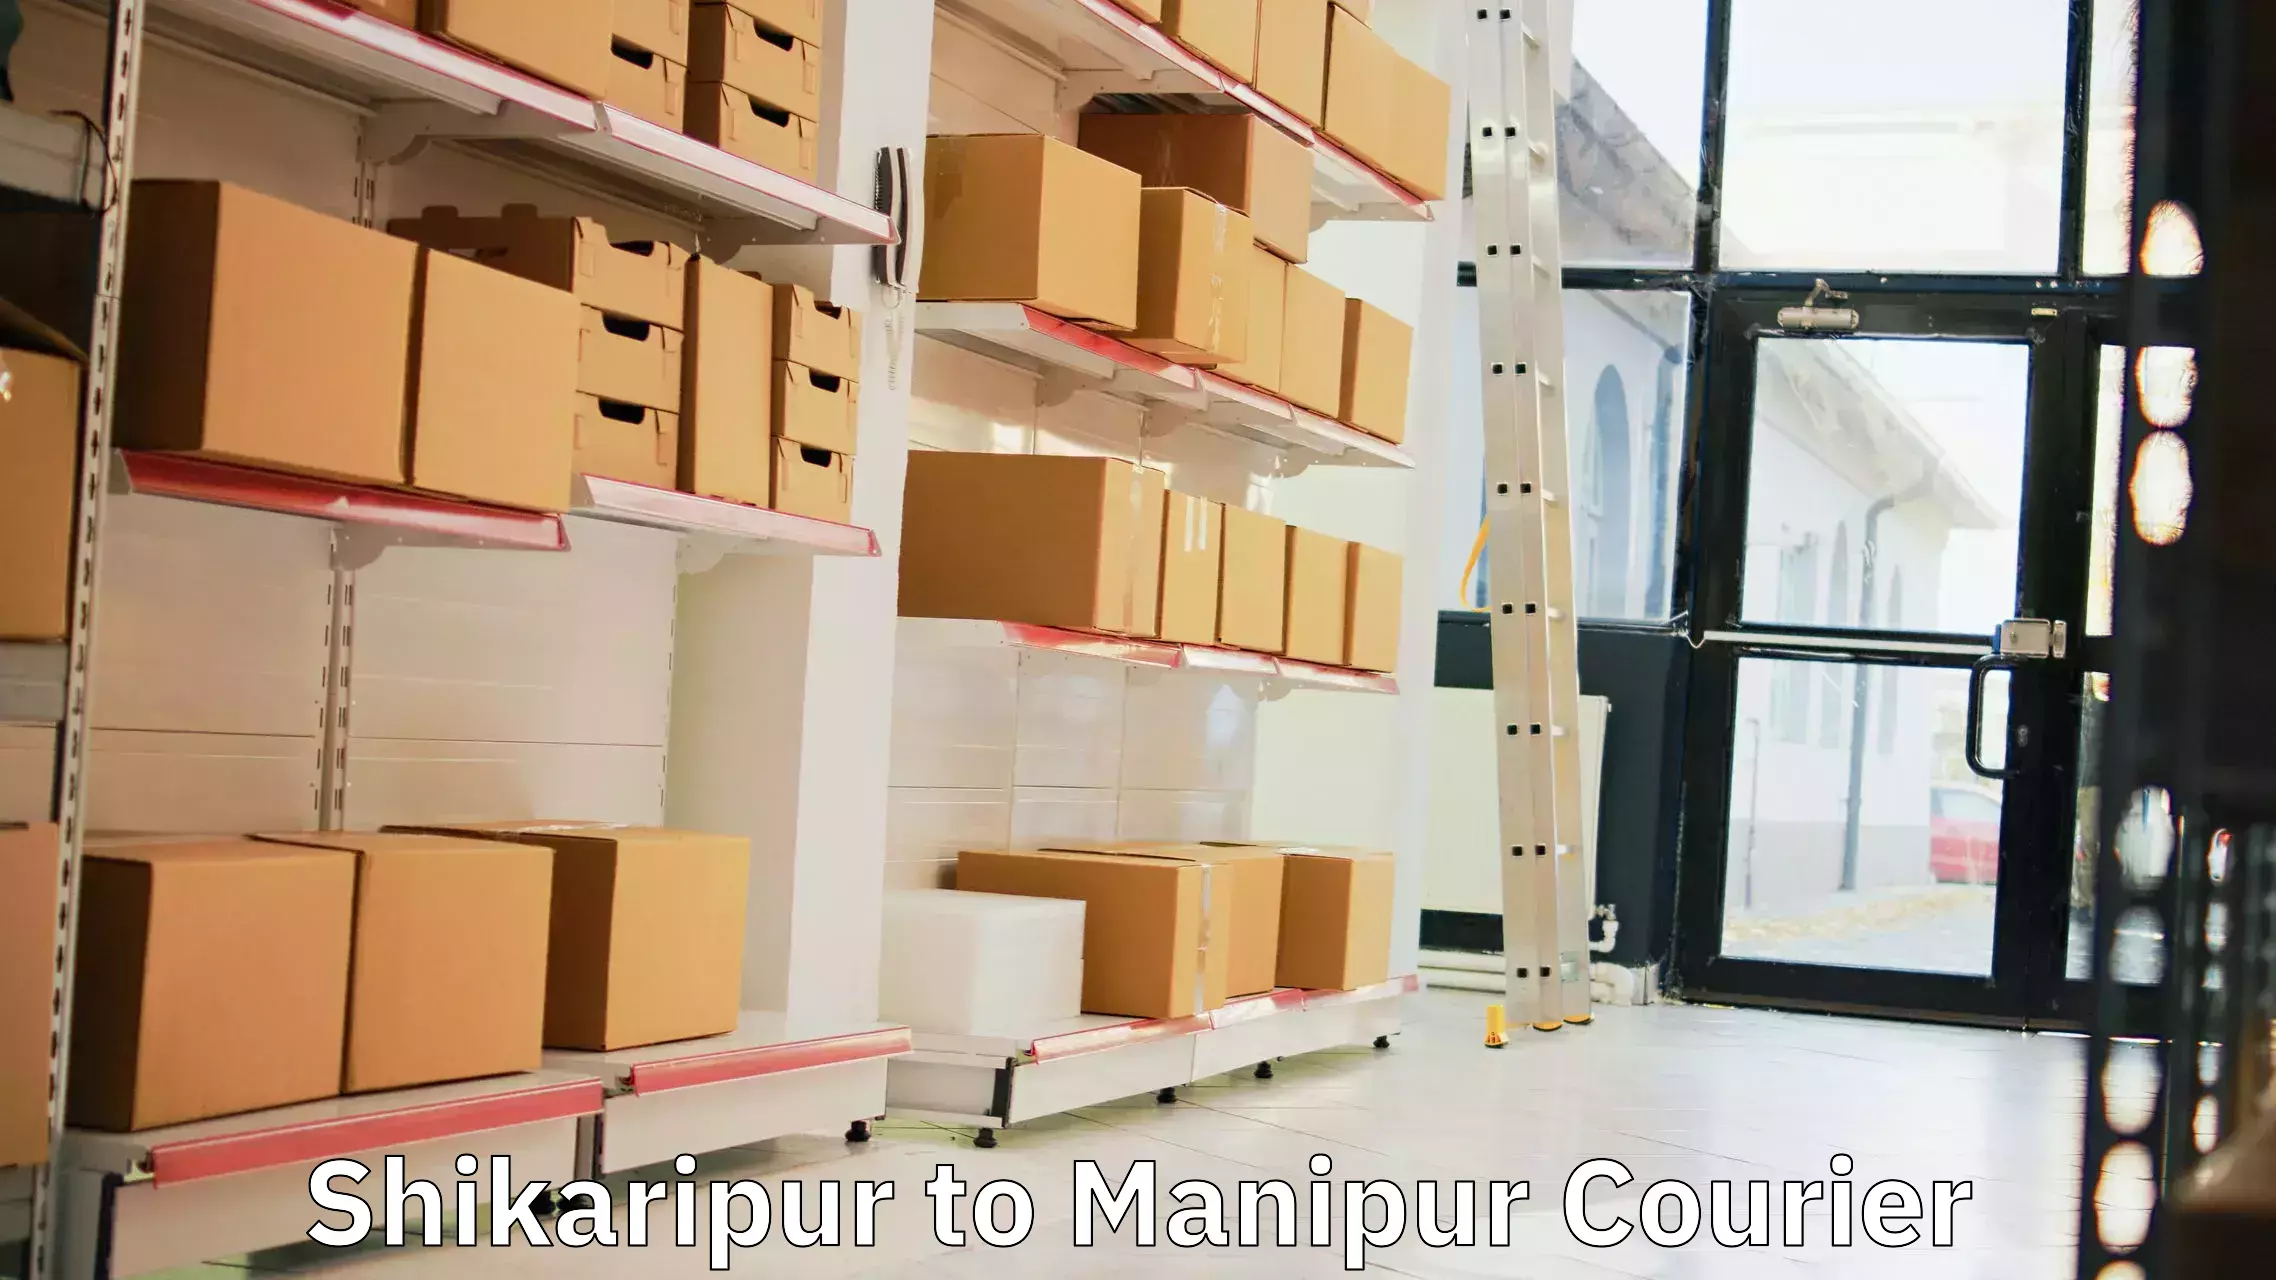 Nationwide delivery network Shikaripur to Churachandpur